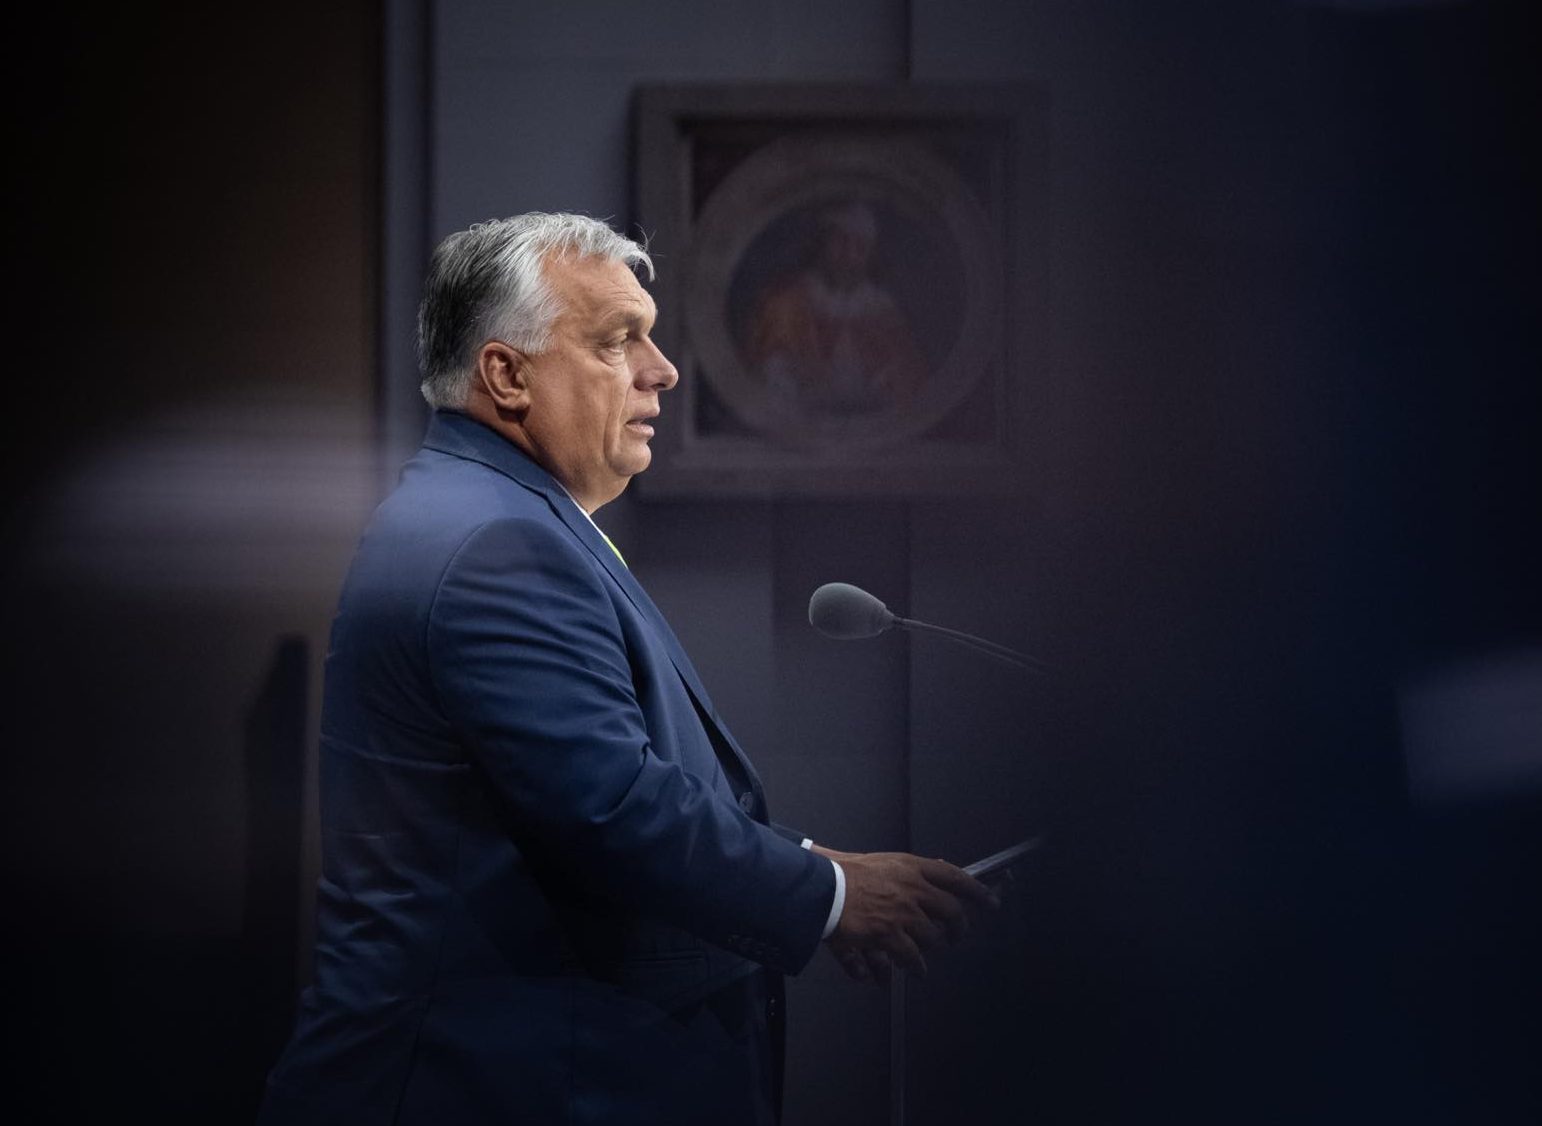 We Will Never Permit Pro-Terror Demonstrations, says Viktor Orbán